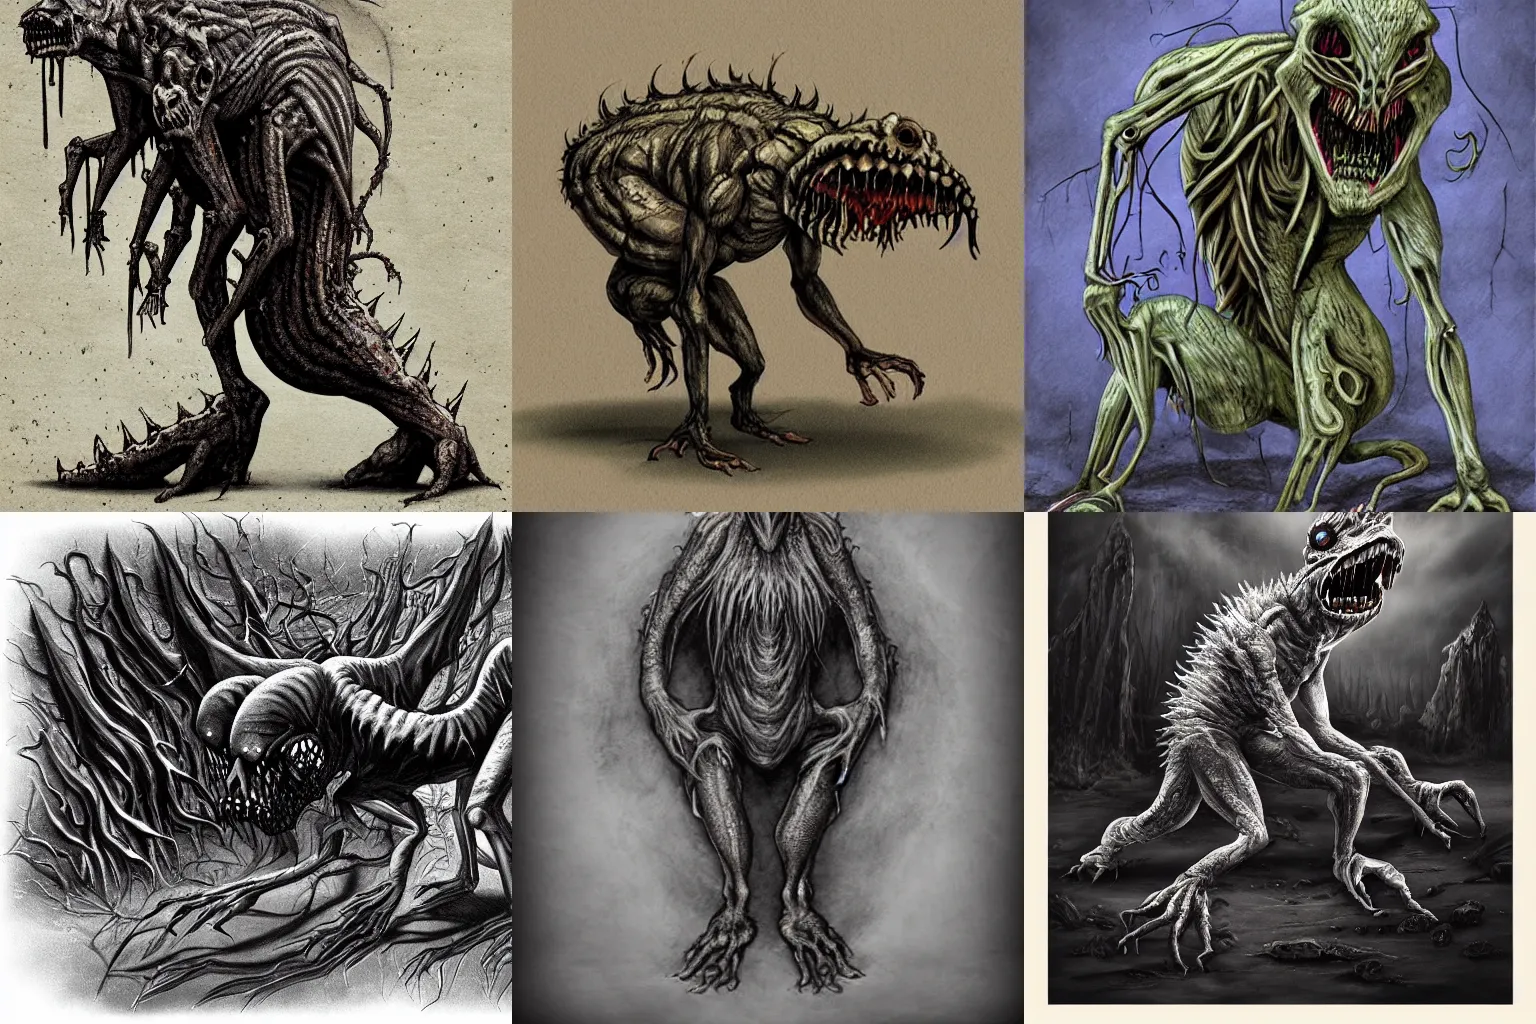 Prompt: naturalism art creepy monster fantasy concept 4 legged crawling